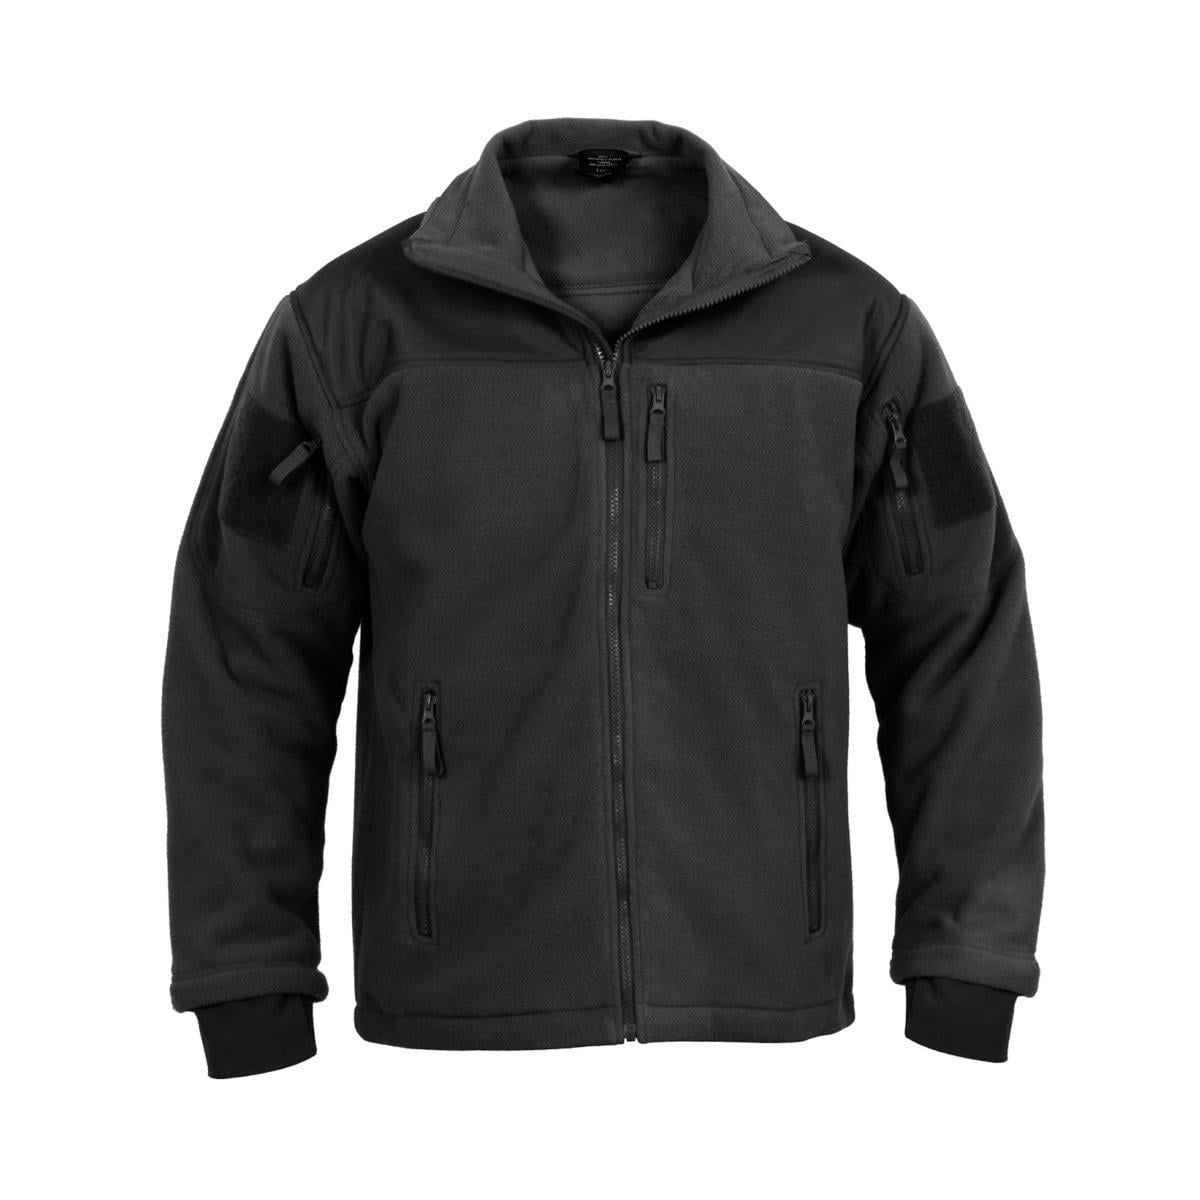 Rothco - Rothco Special Ops Tactical Fleece Jacket - Walmart.com ...